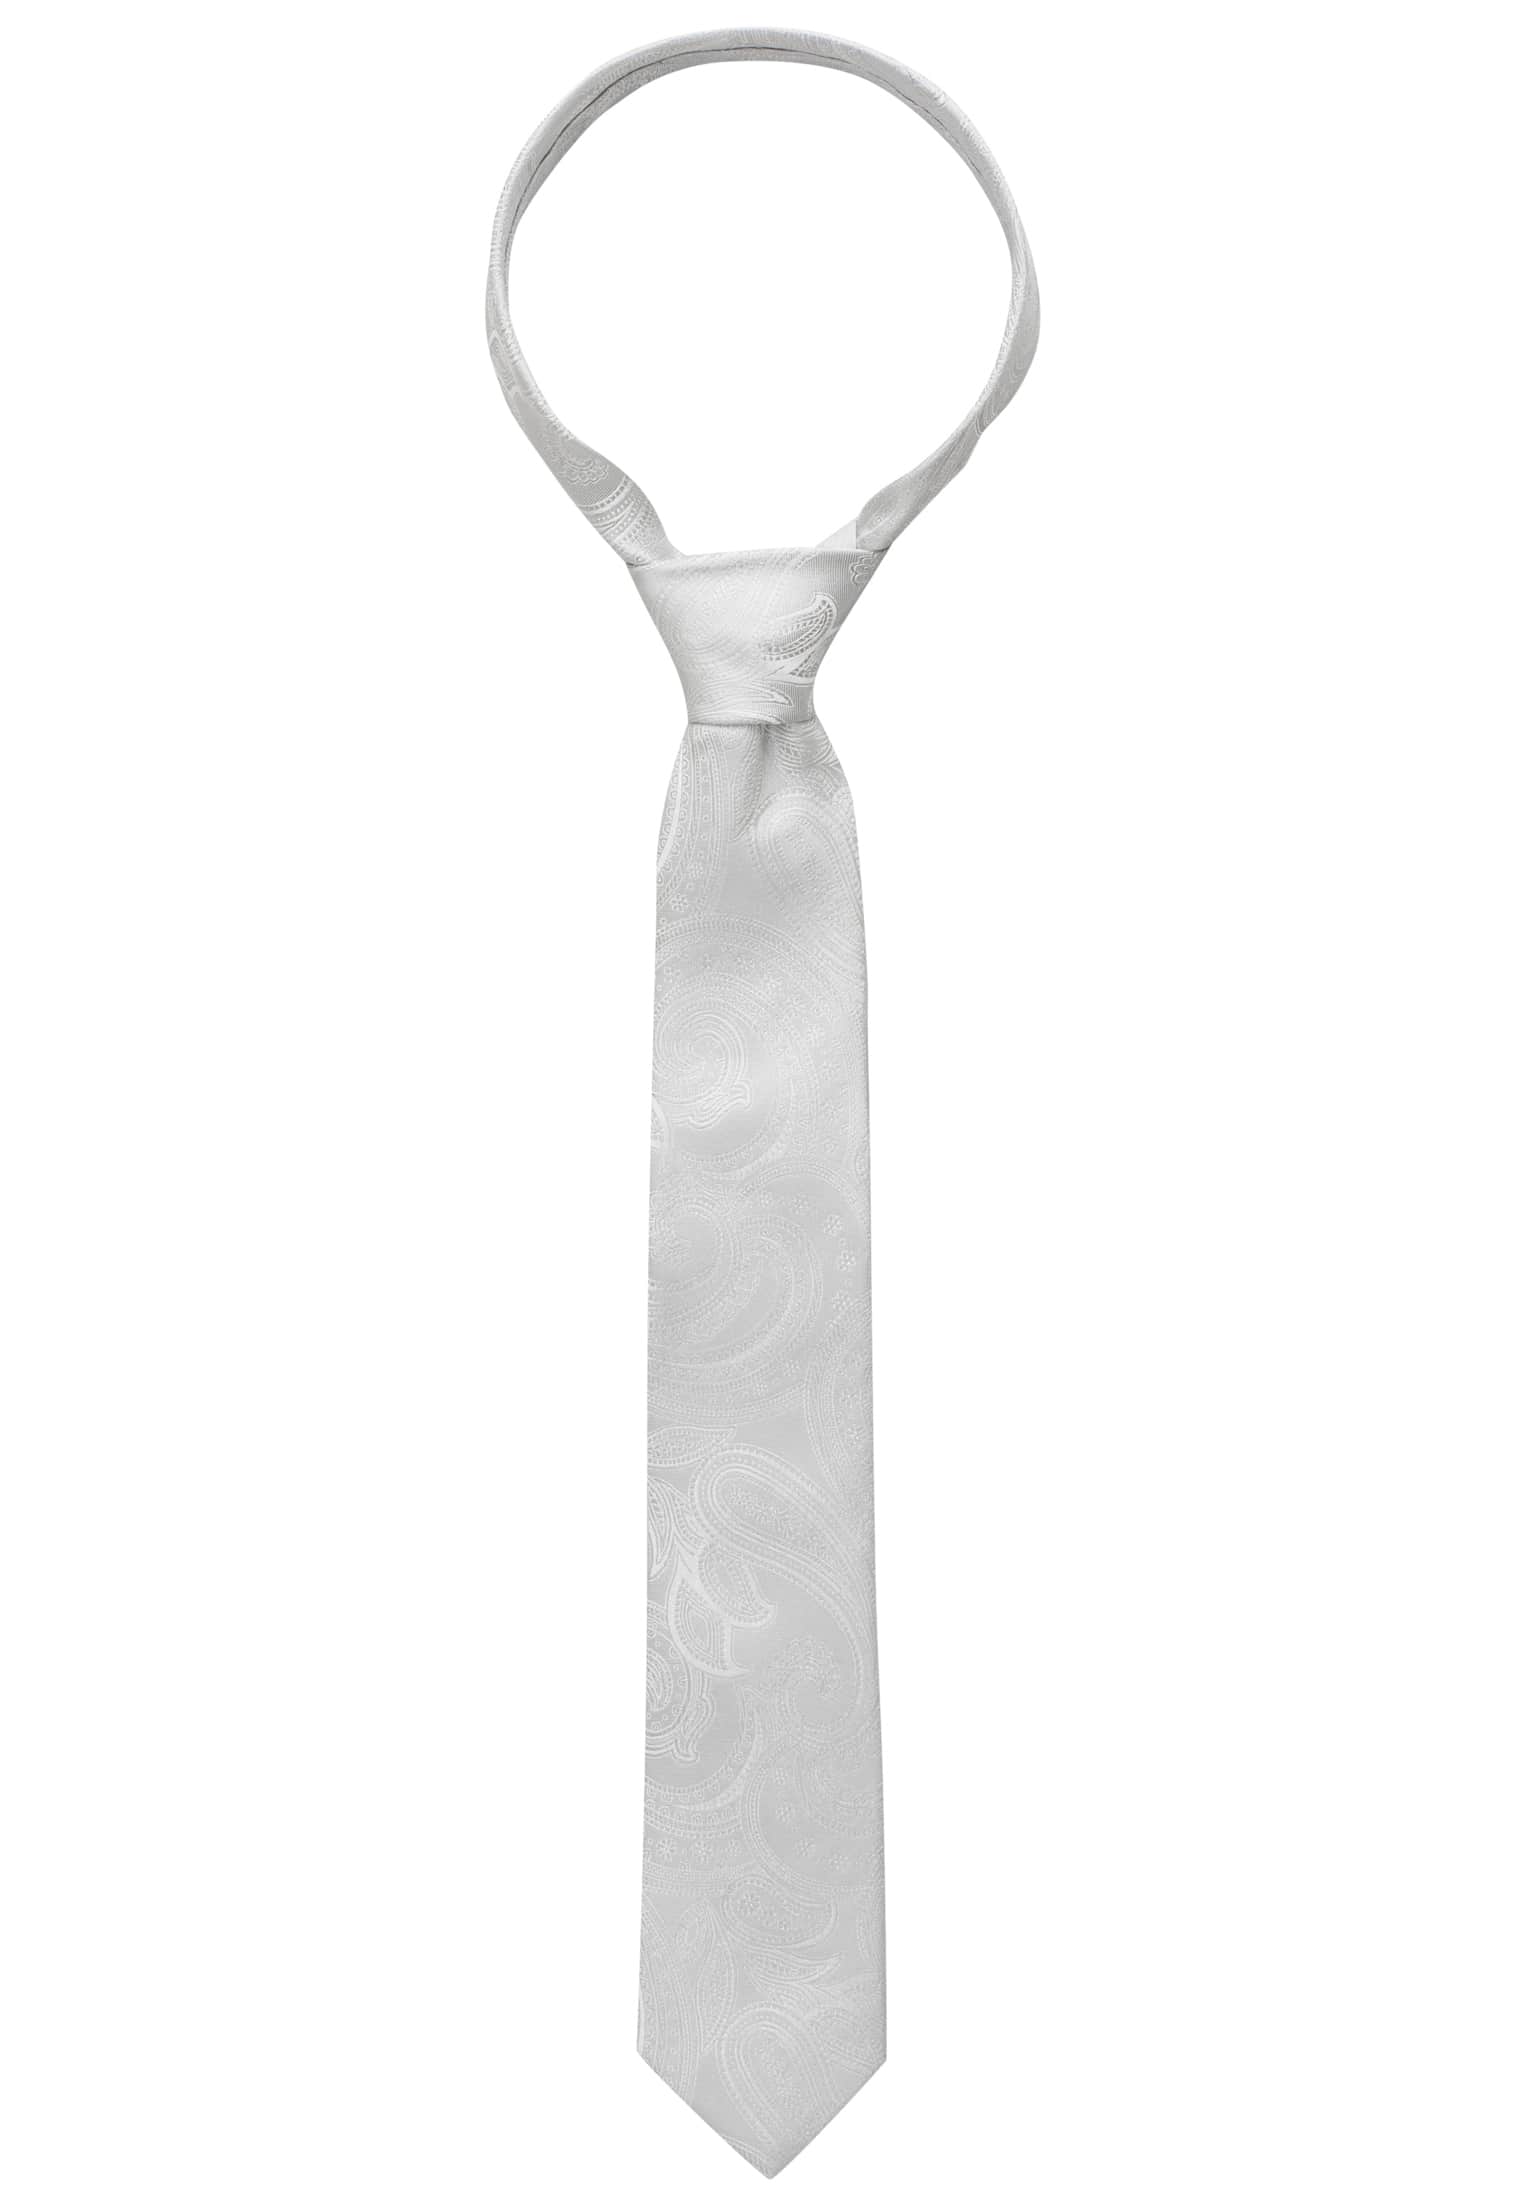 Krawatte in silber 1AC01869-03-11-160 | | gemustert 160 | silber